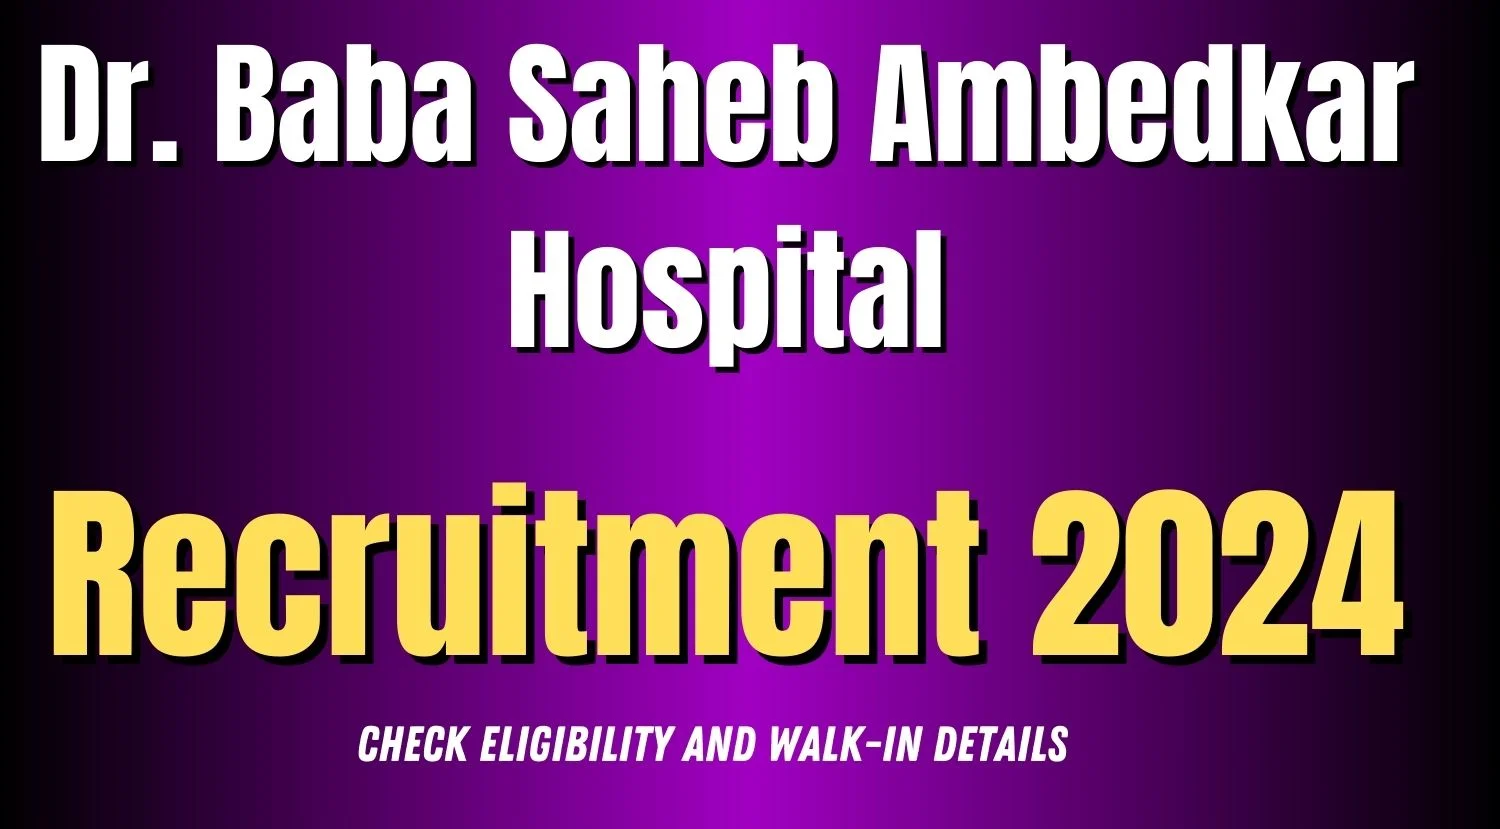 Dr Baba Saheb Ambedkar Hospital Recruitment 2024